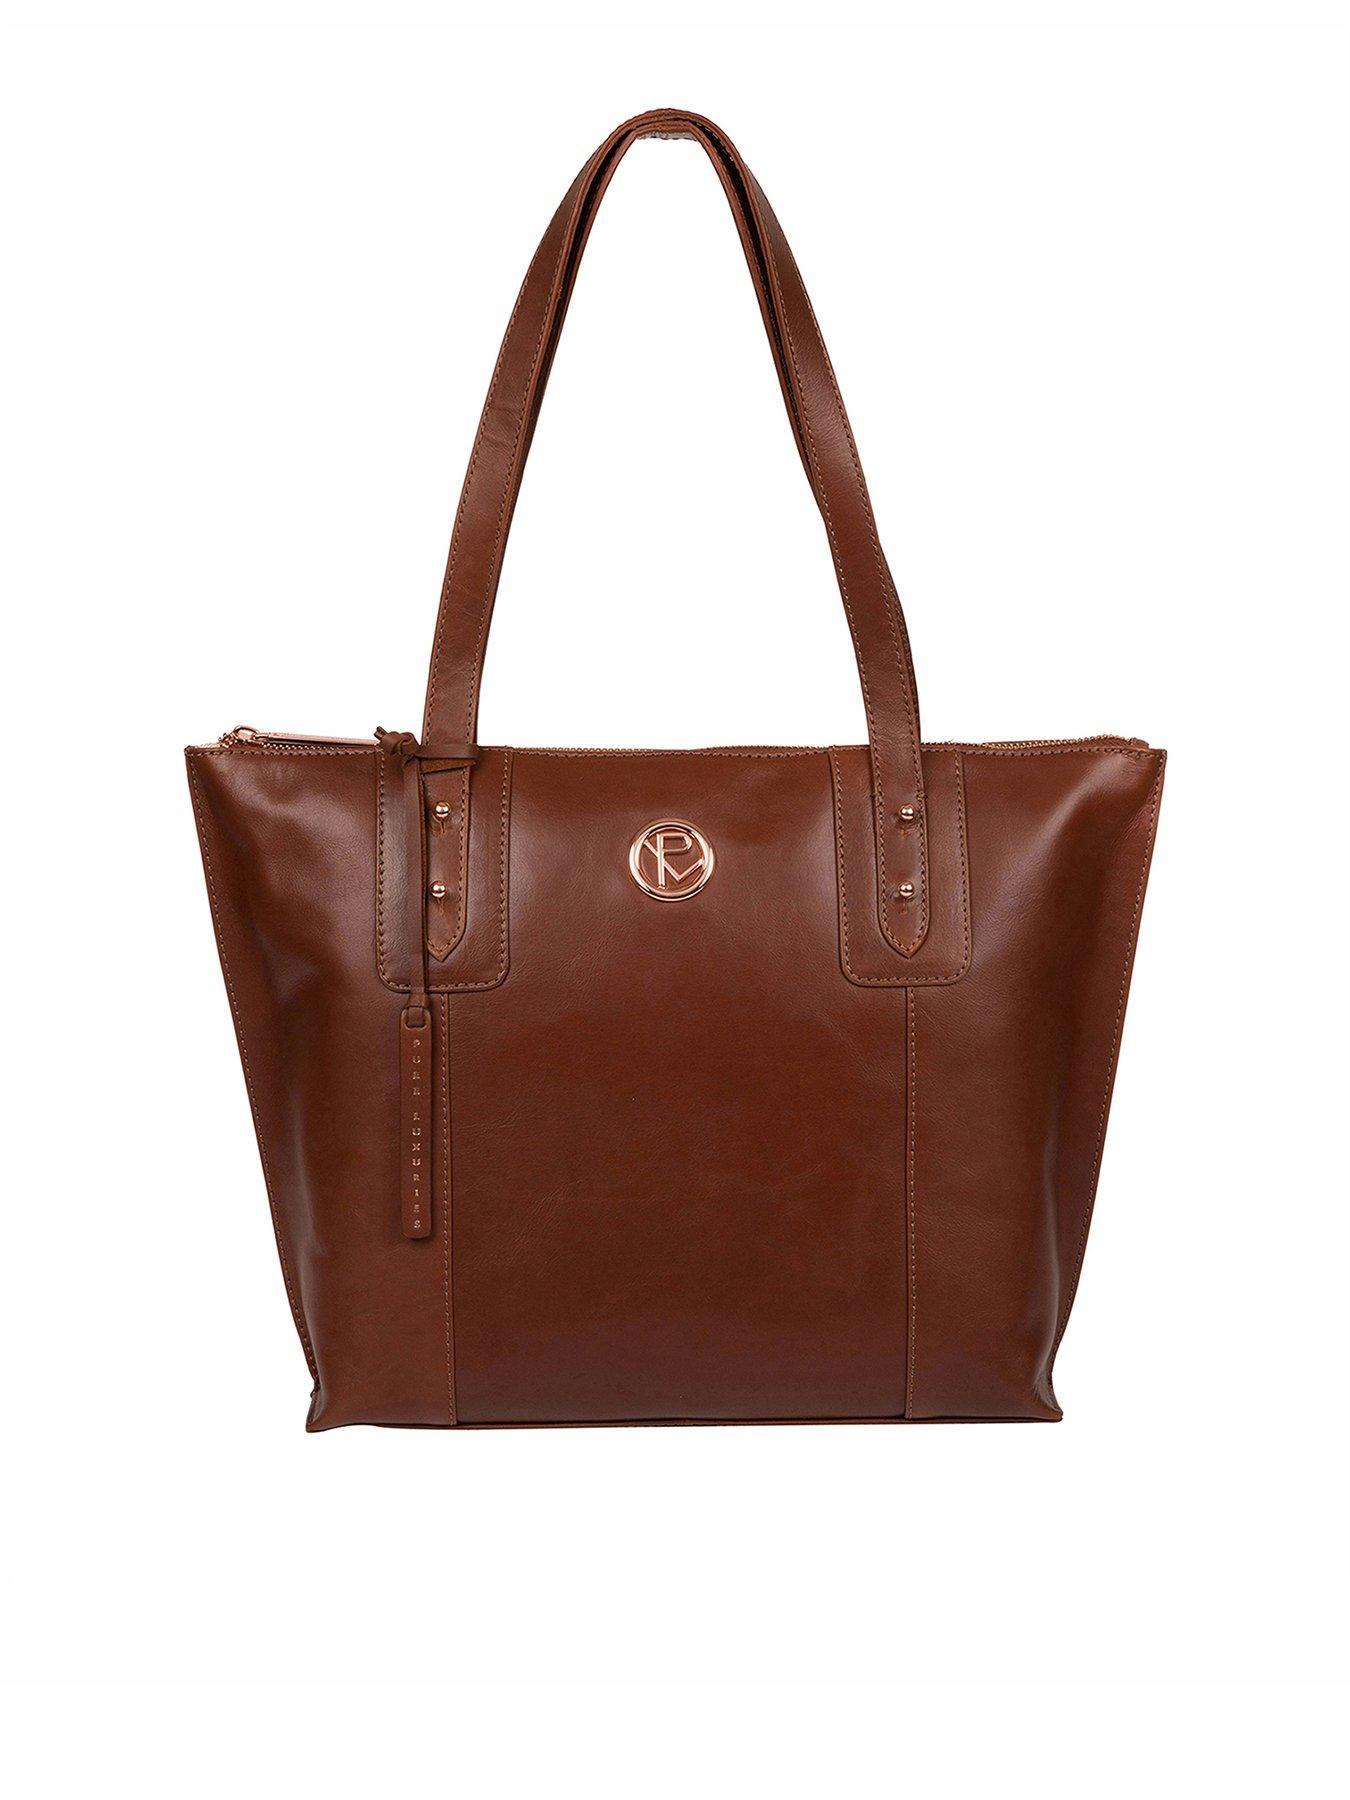 Bags & Purses Goya Large Zip Top Leather Tote Bag - Cognac